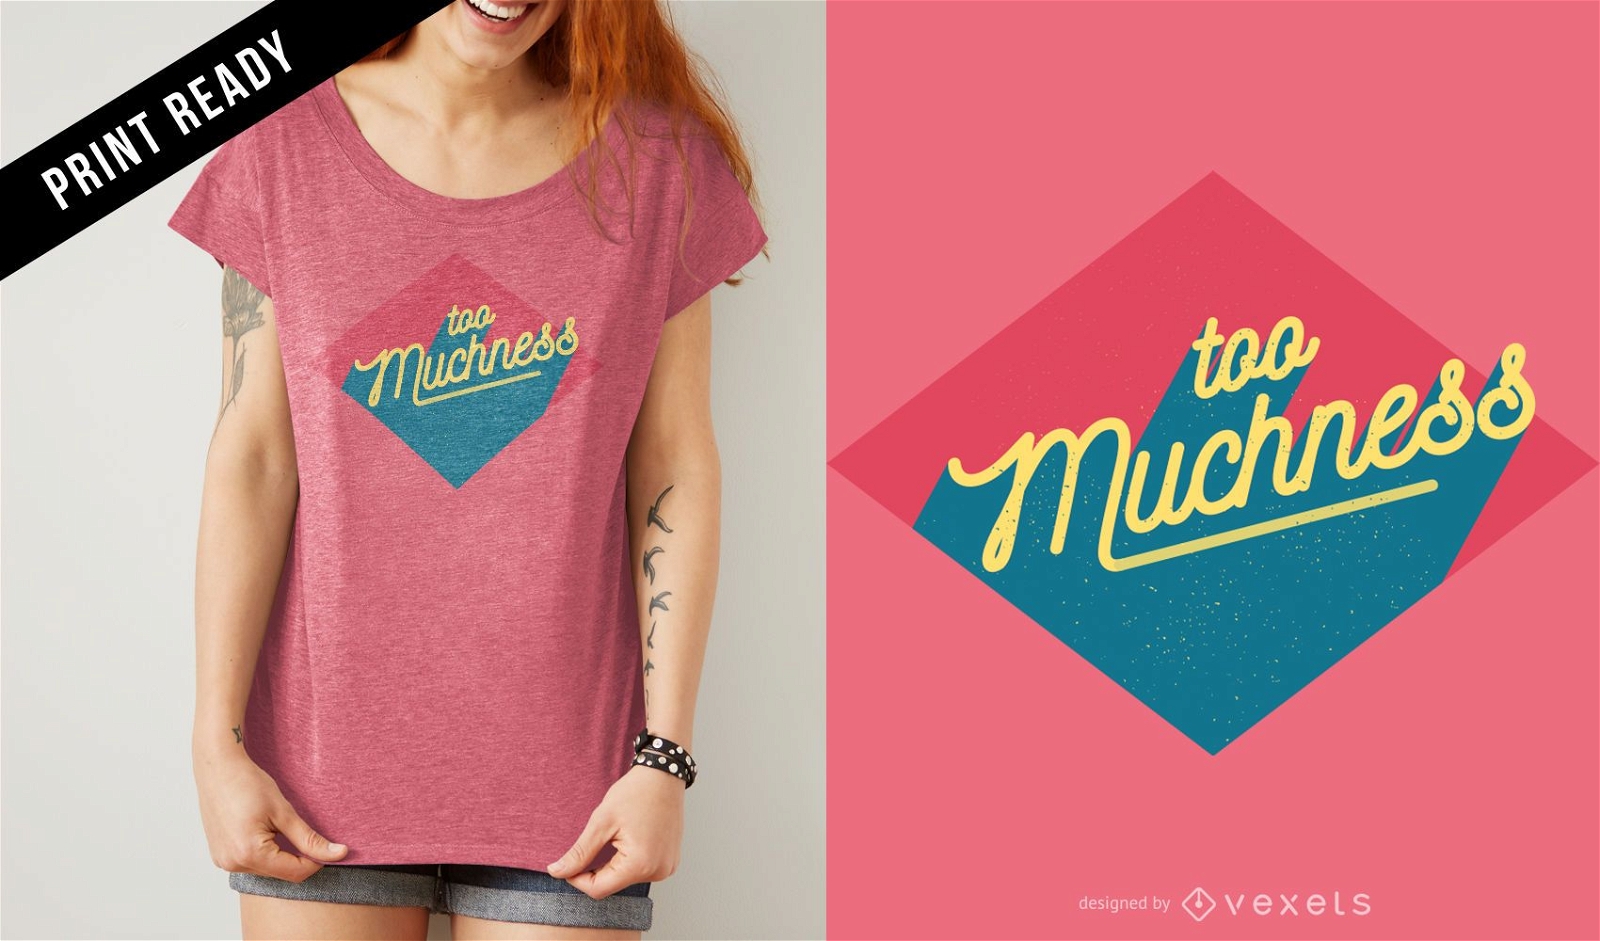 Too muchness t-shirt design